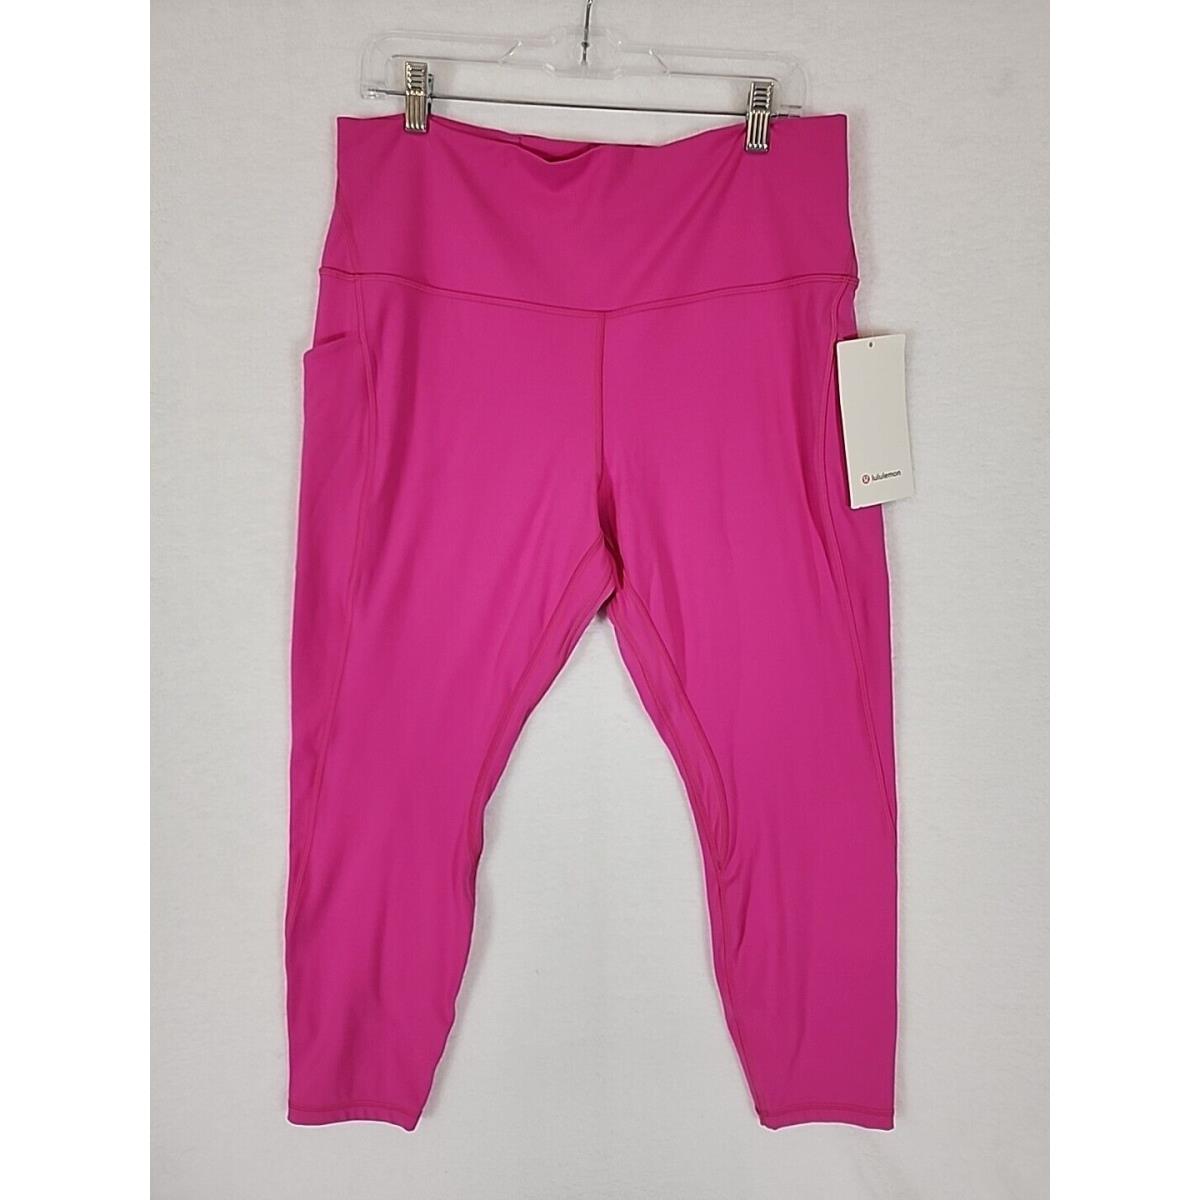 Lululemon Align High-rise Pant 25 Pockets Dark Pink Sz 16 Flaw - See Pics